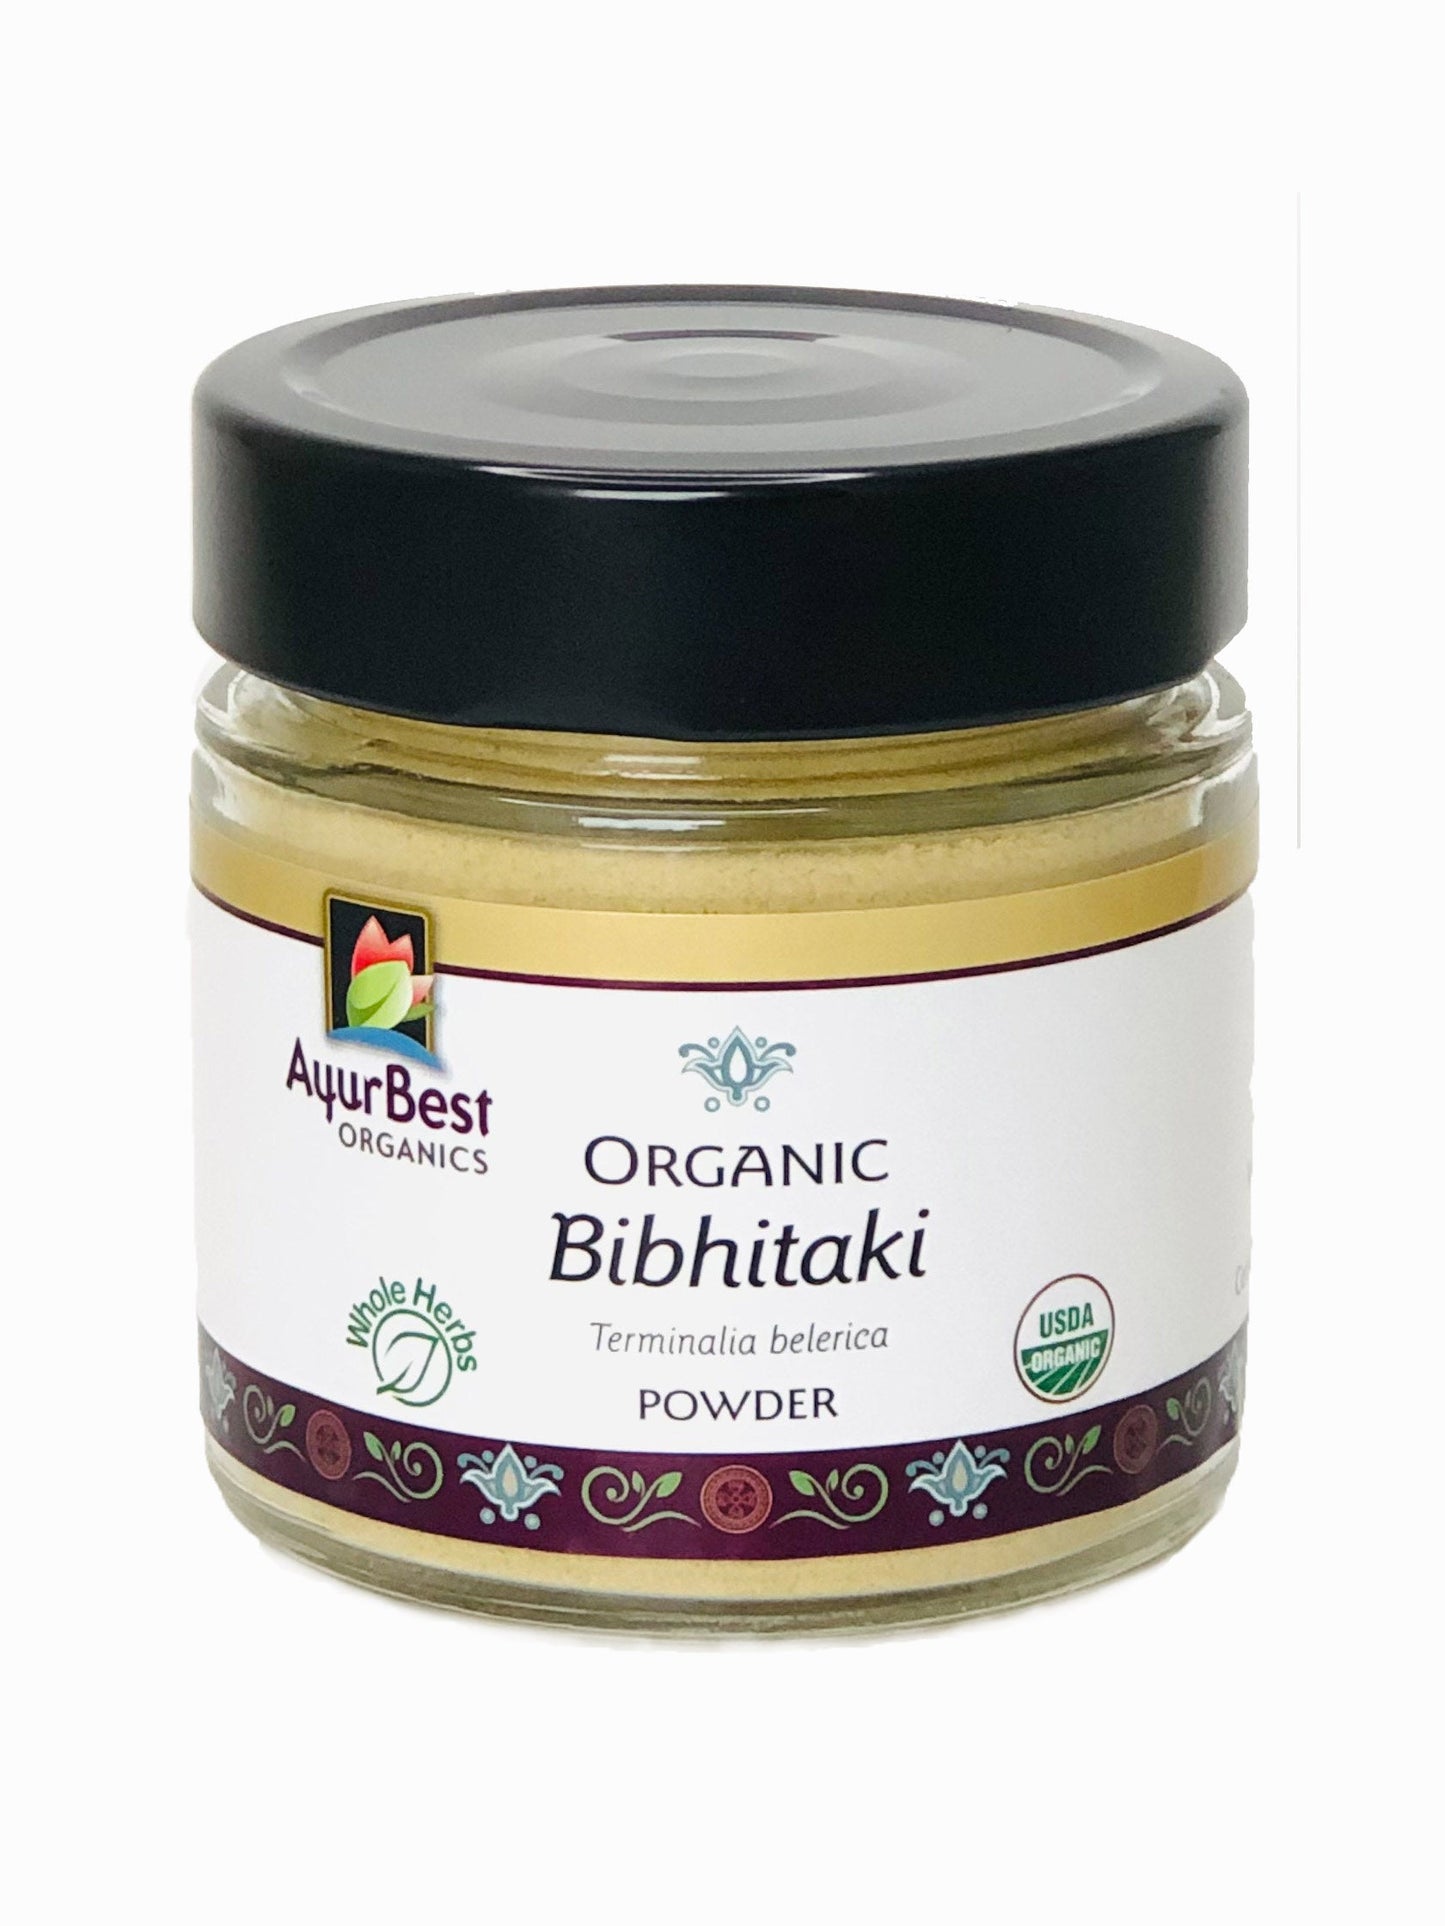 Wholesale Spices & Herbs - Bibhitaki Powder, Organic 4.4oz (124g) Jar